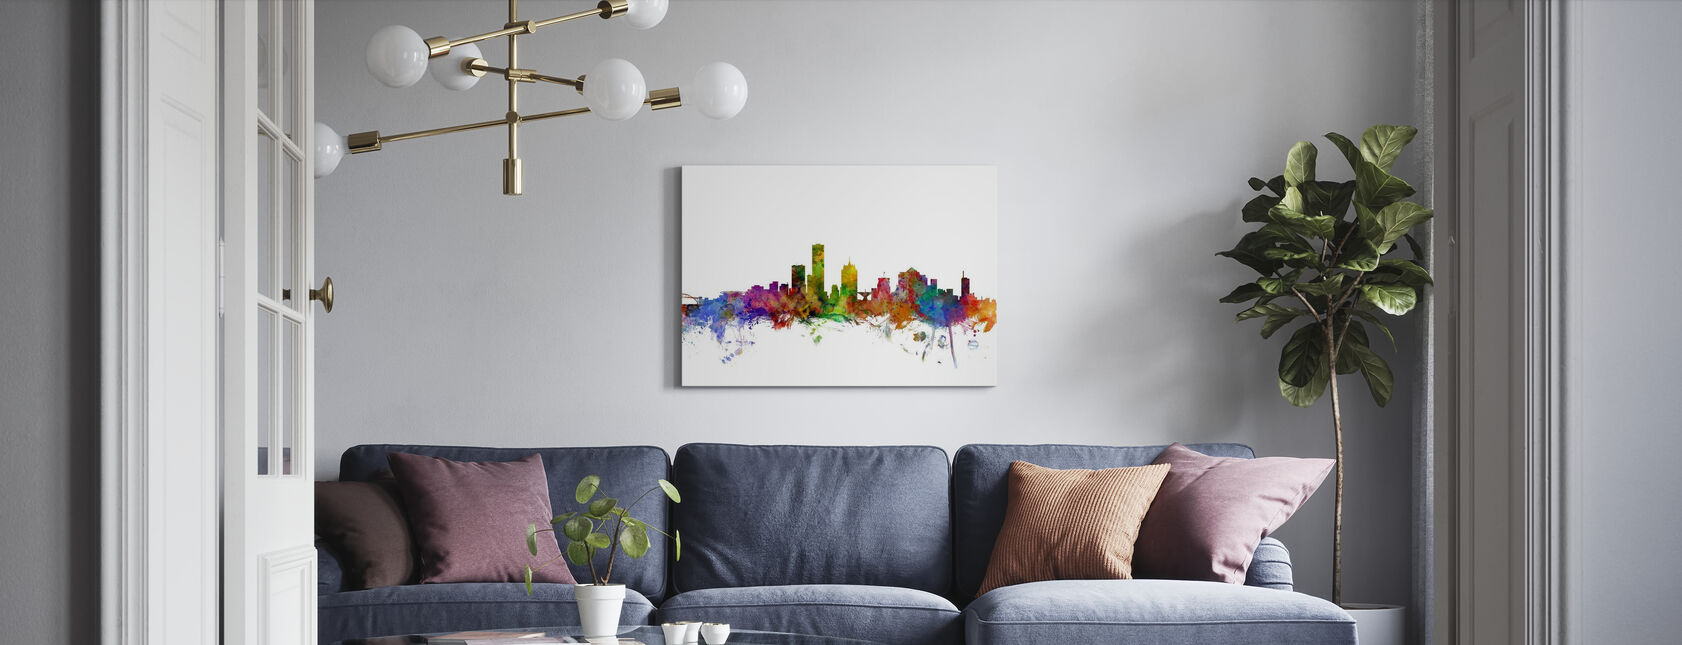 Milwaukee Wisconsin Skyline - Canvas print - Living Room